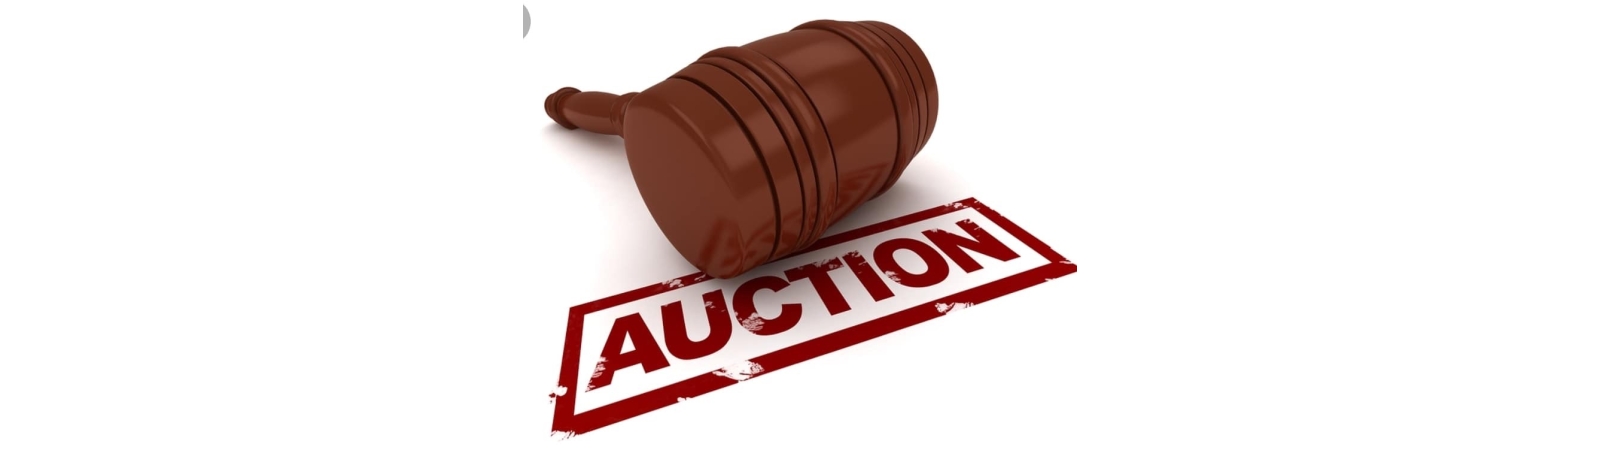 Robertson Auction Company | Auction Ninja